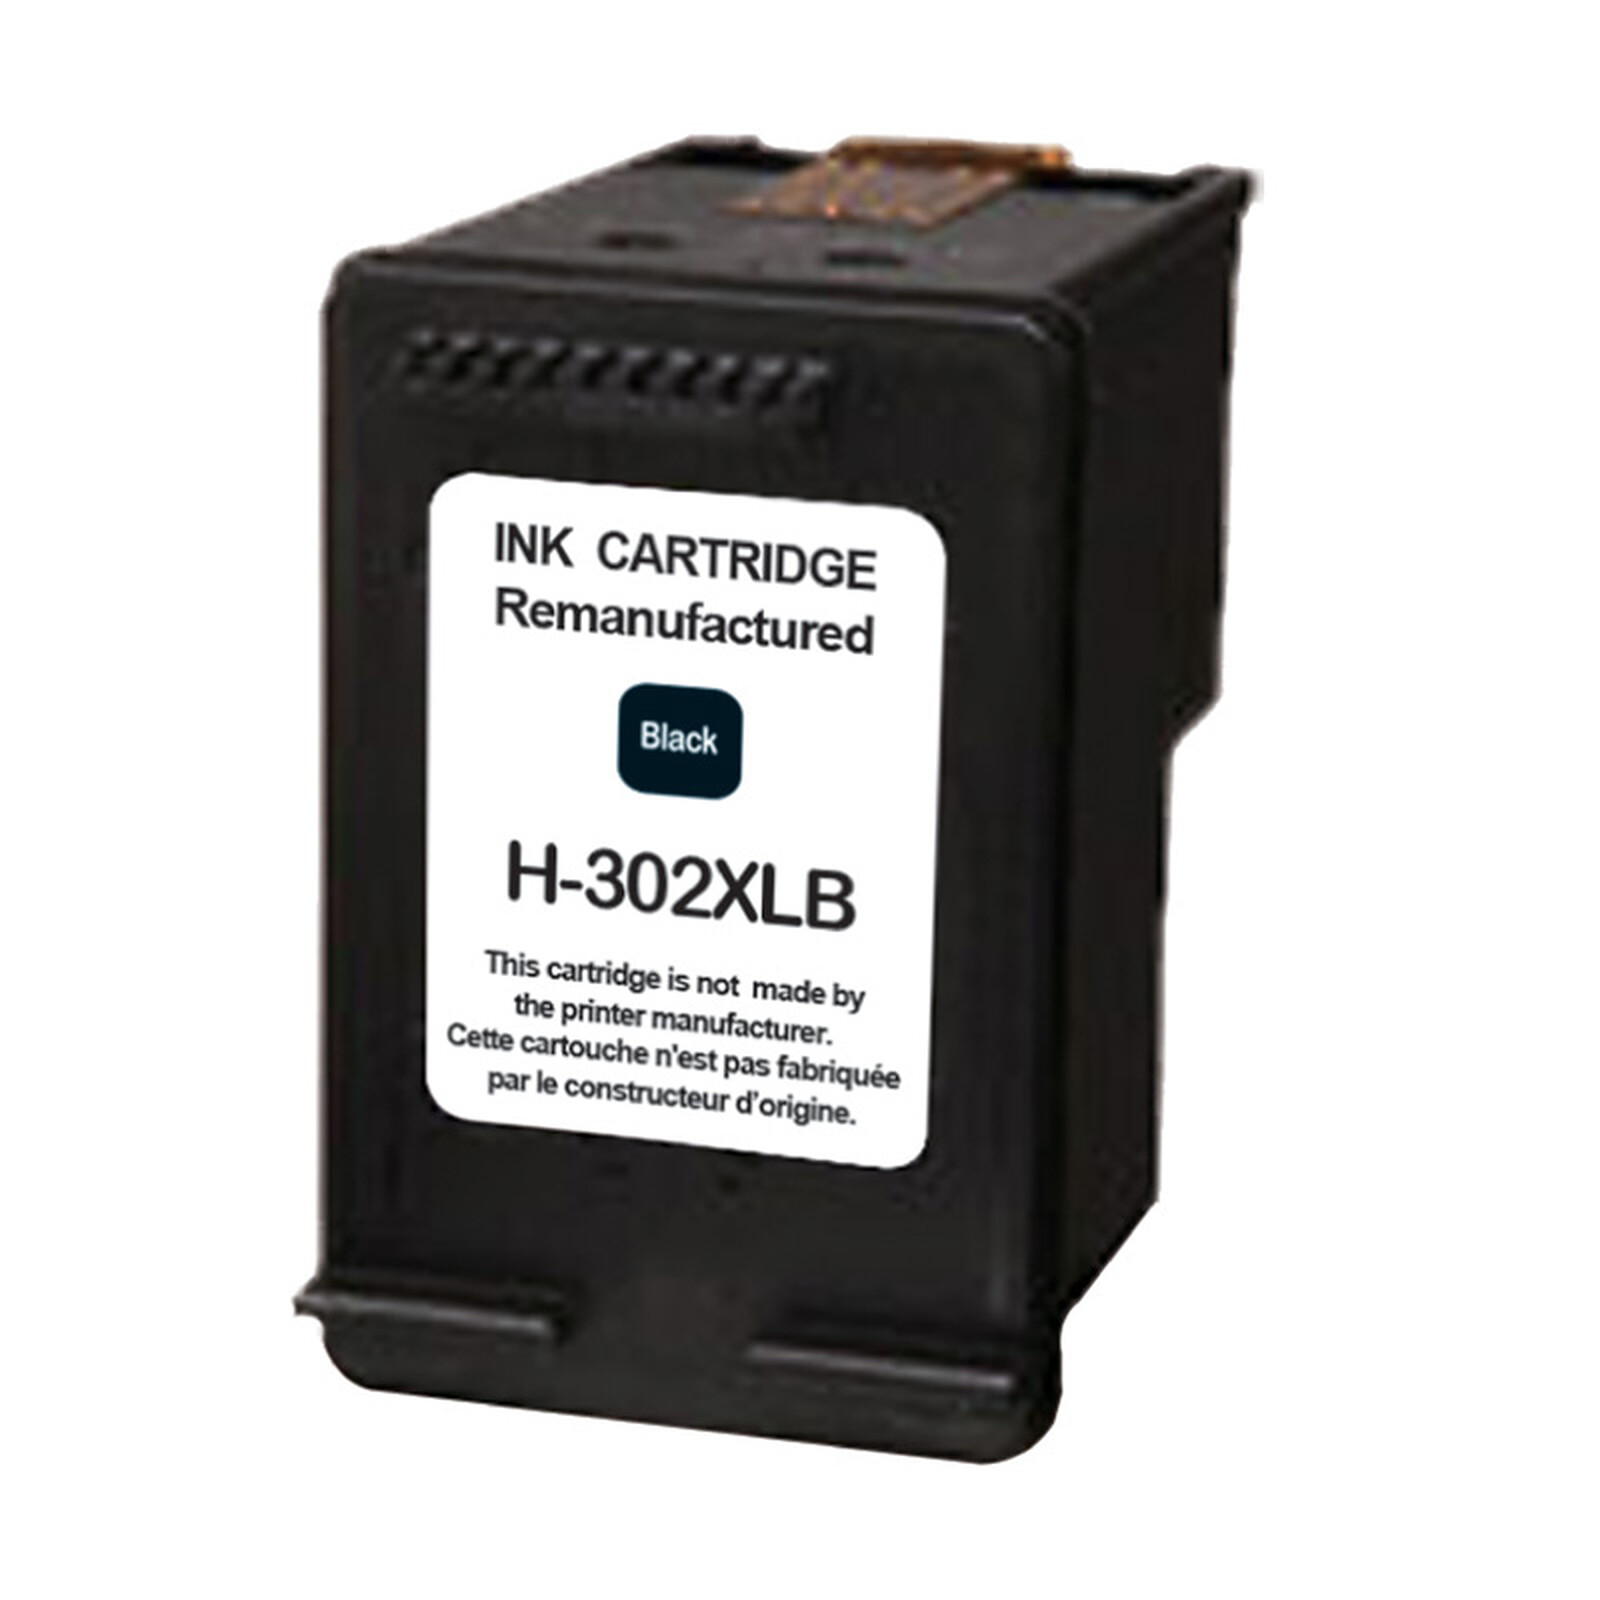 Cartouche compatible HP 903XL - magenta - Uprint